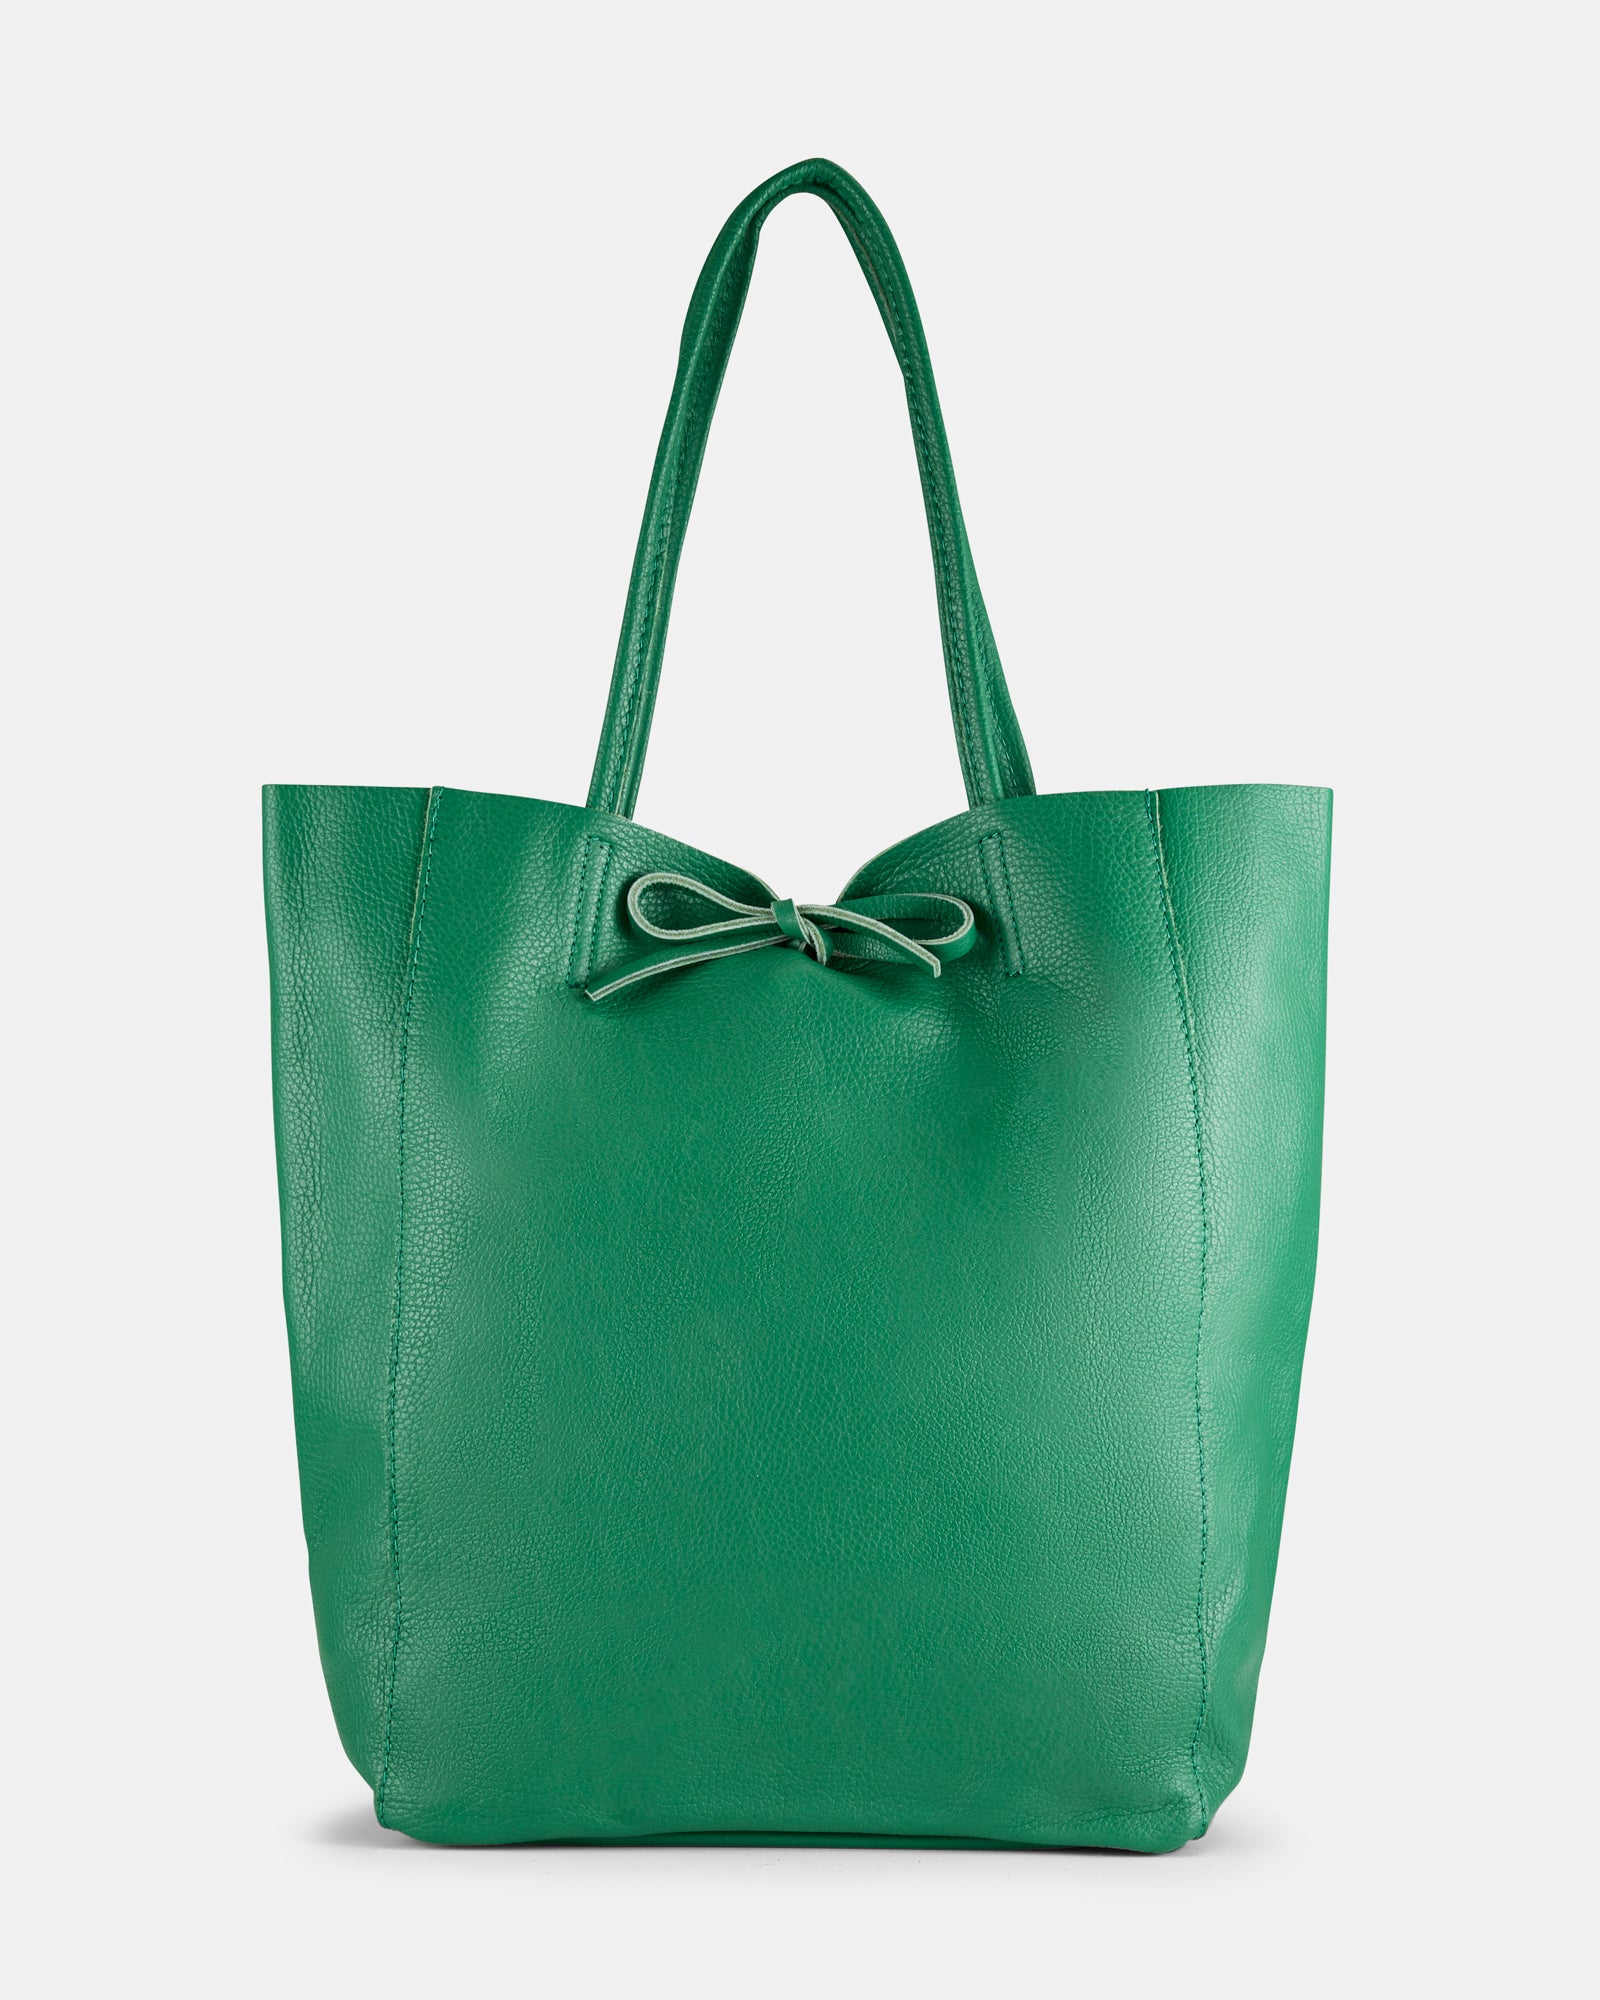 Wholesale Leather Bags Online, Handbag - Monica